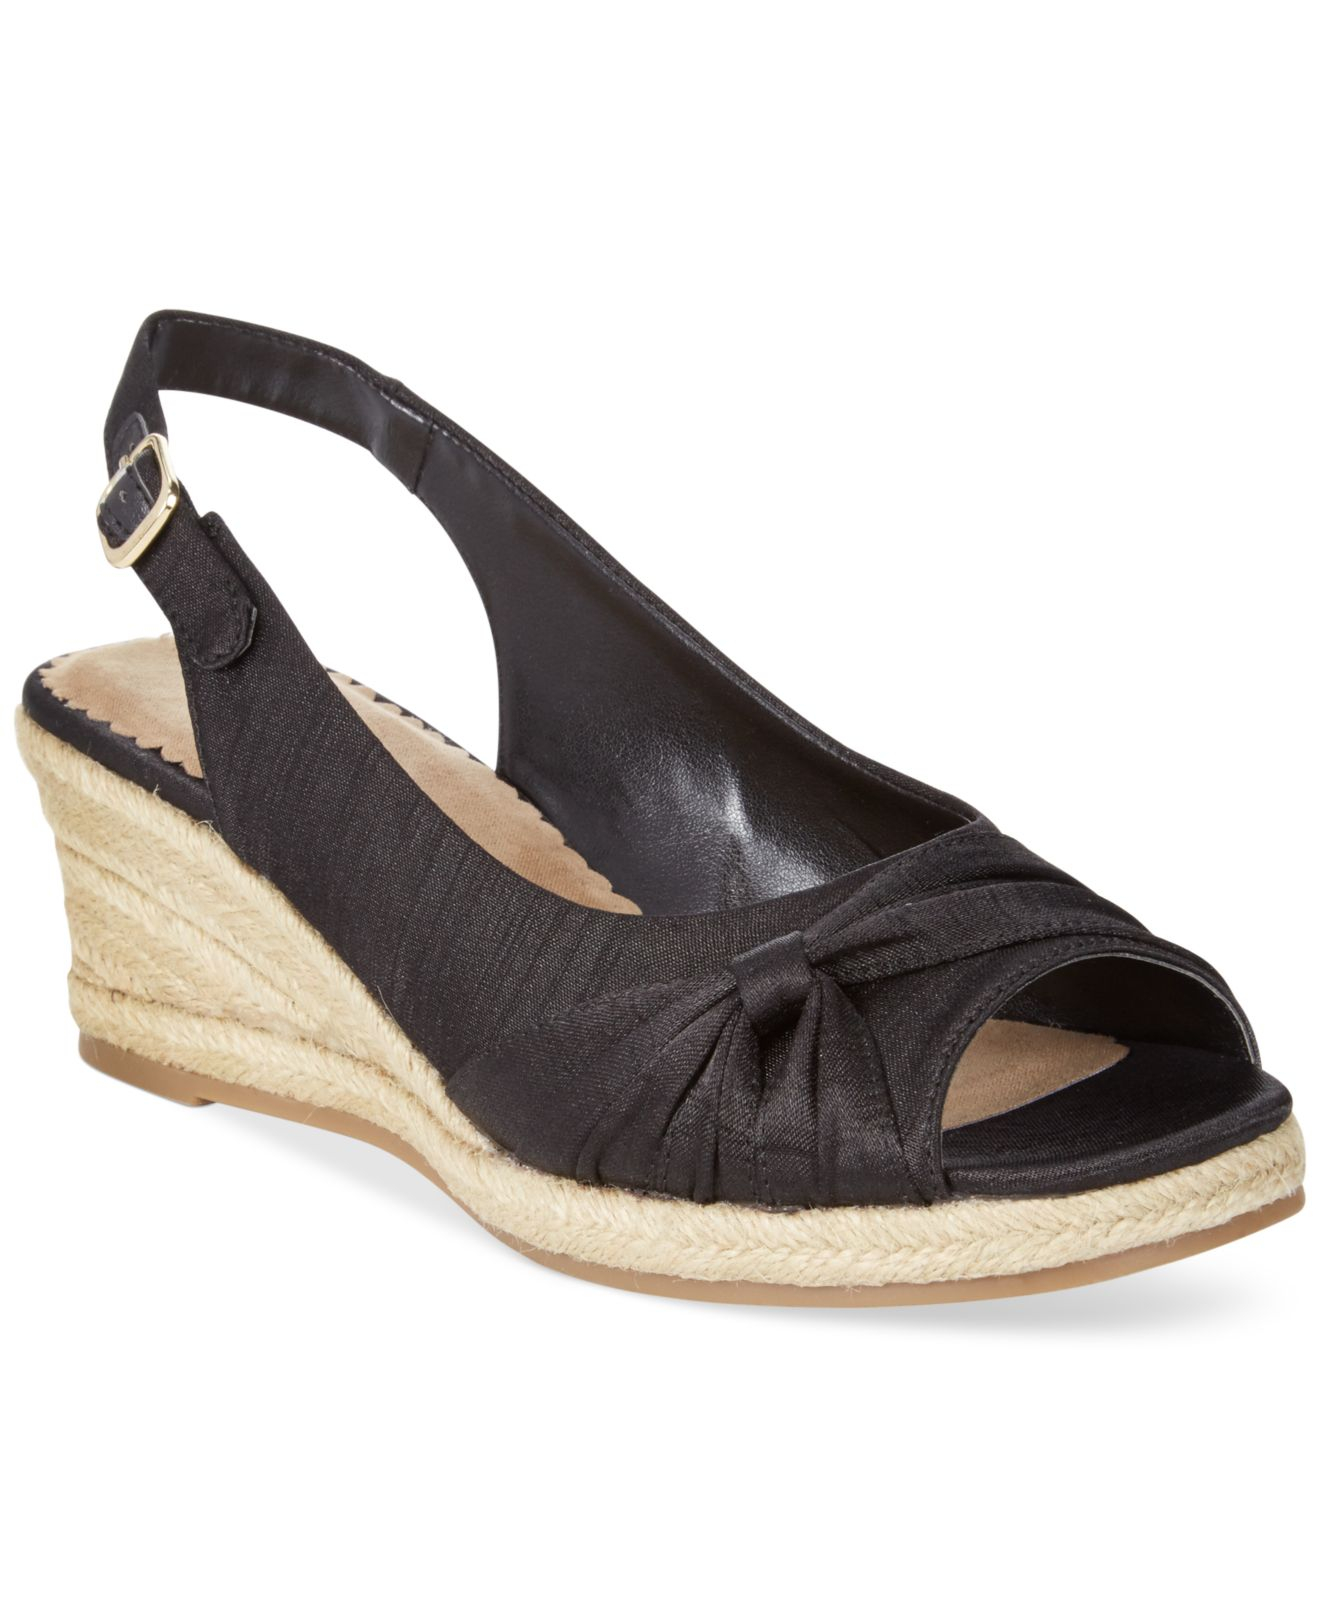 Lyst - Bella Vita Sangria Too Espadrille Platform Wedge Sandals in Black